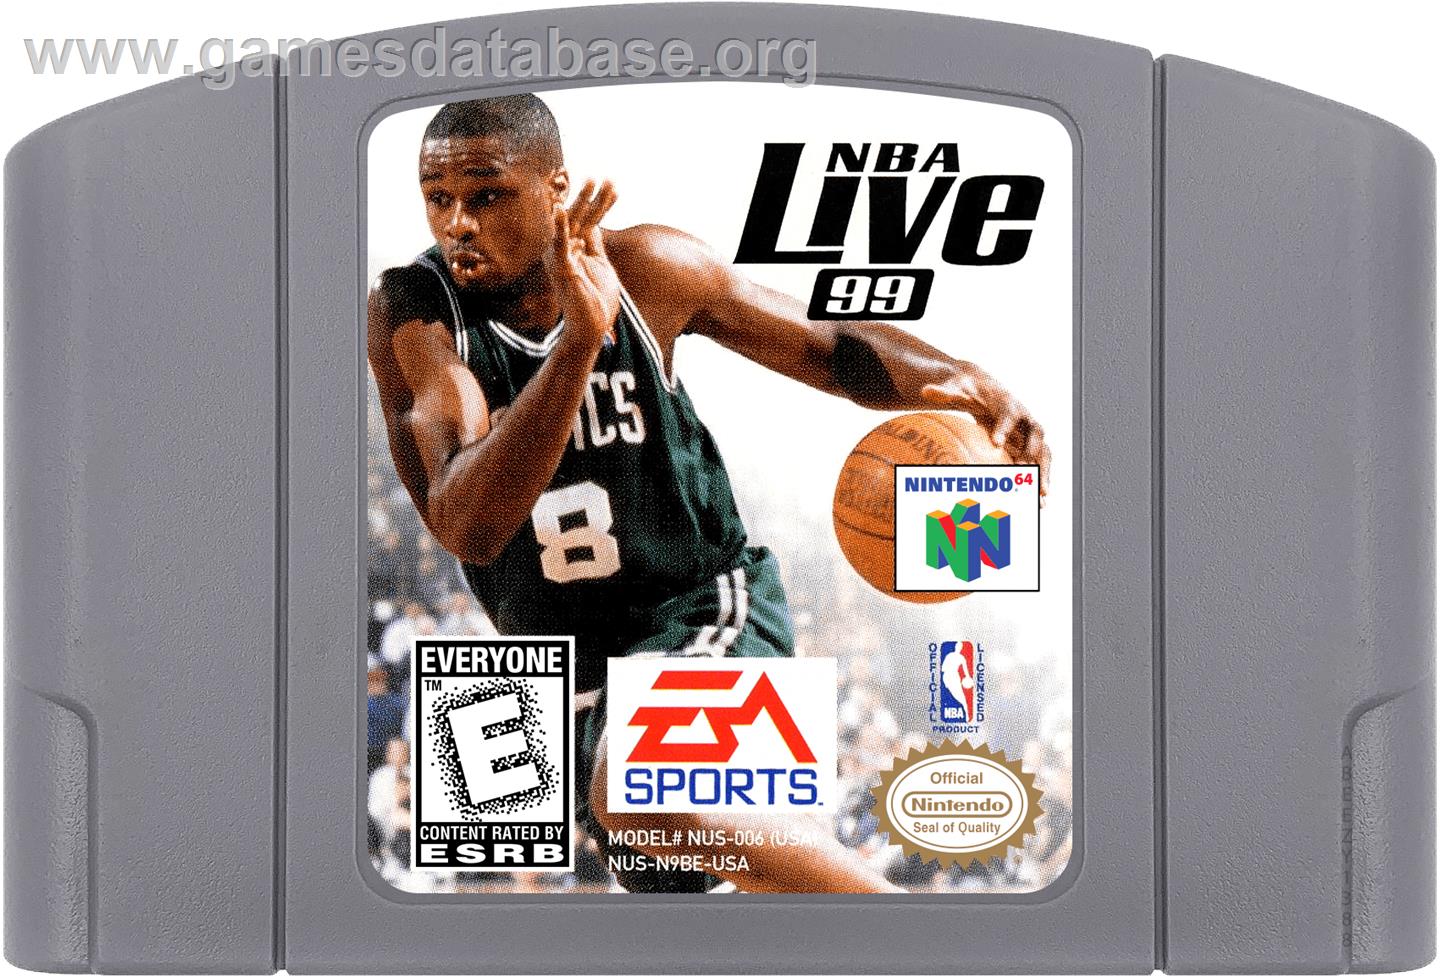 NBA Live '99 - Nintendo N64 - Artwork - Cartridge